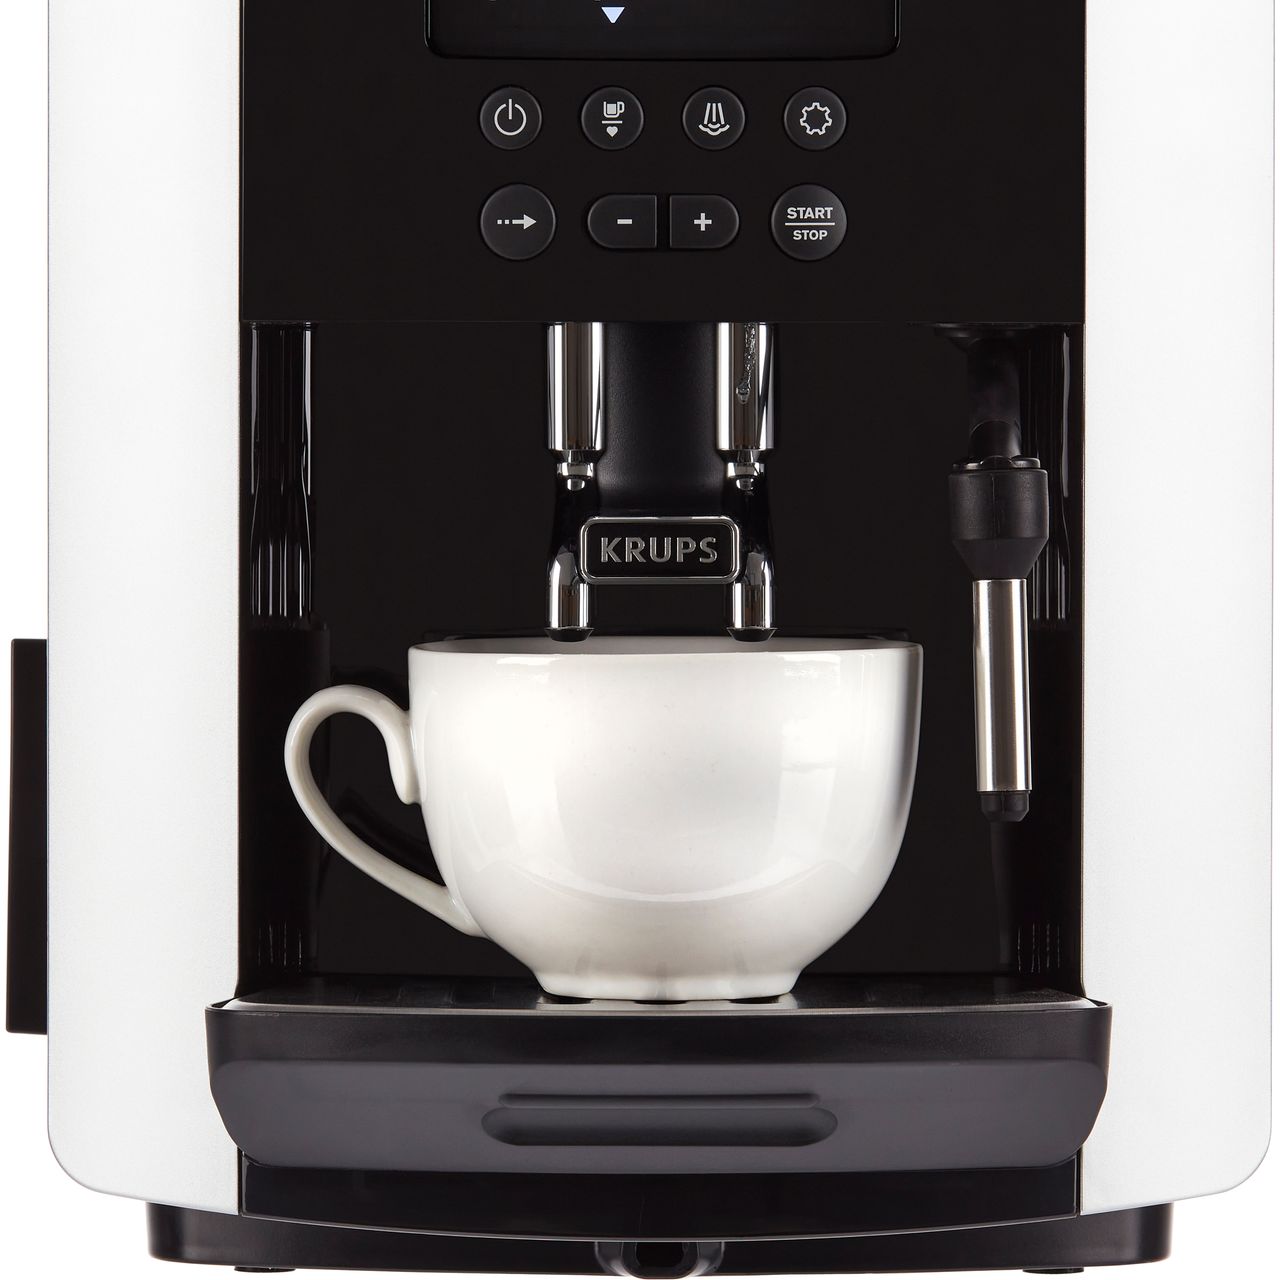 EA817840, Krups Bean to Cup Coffee Machine